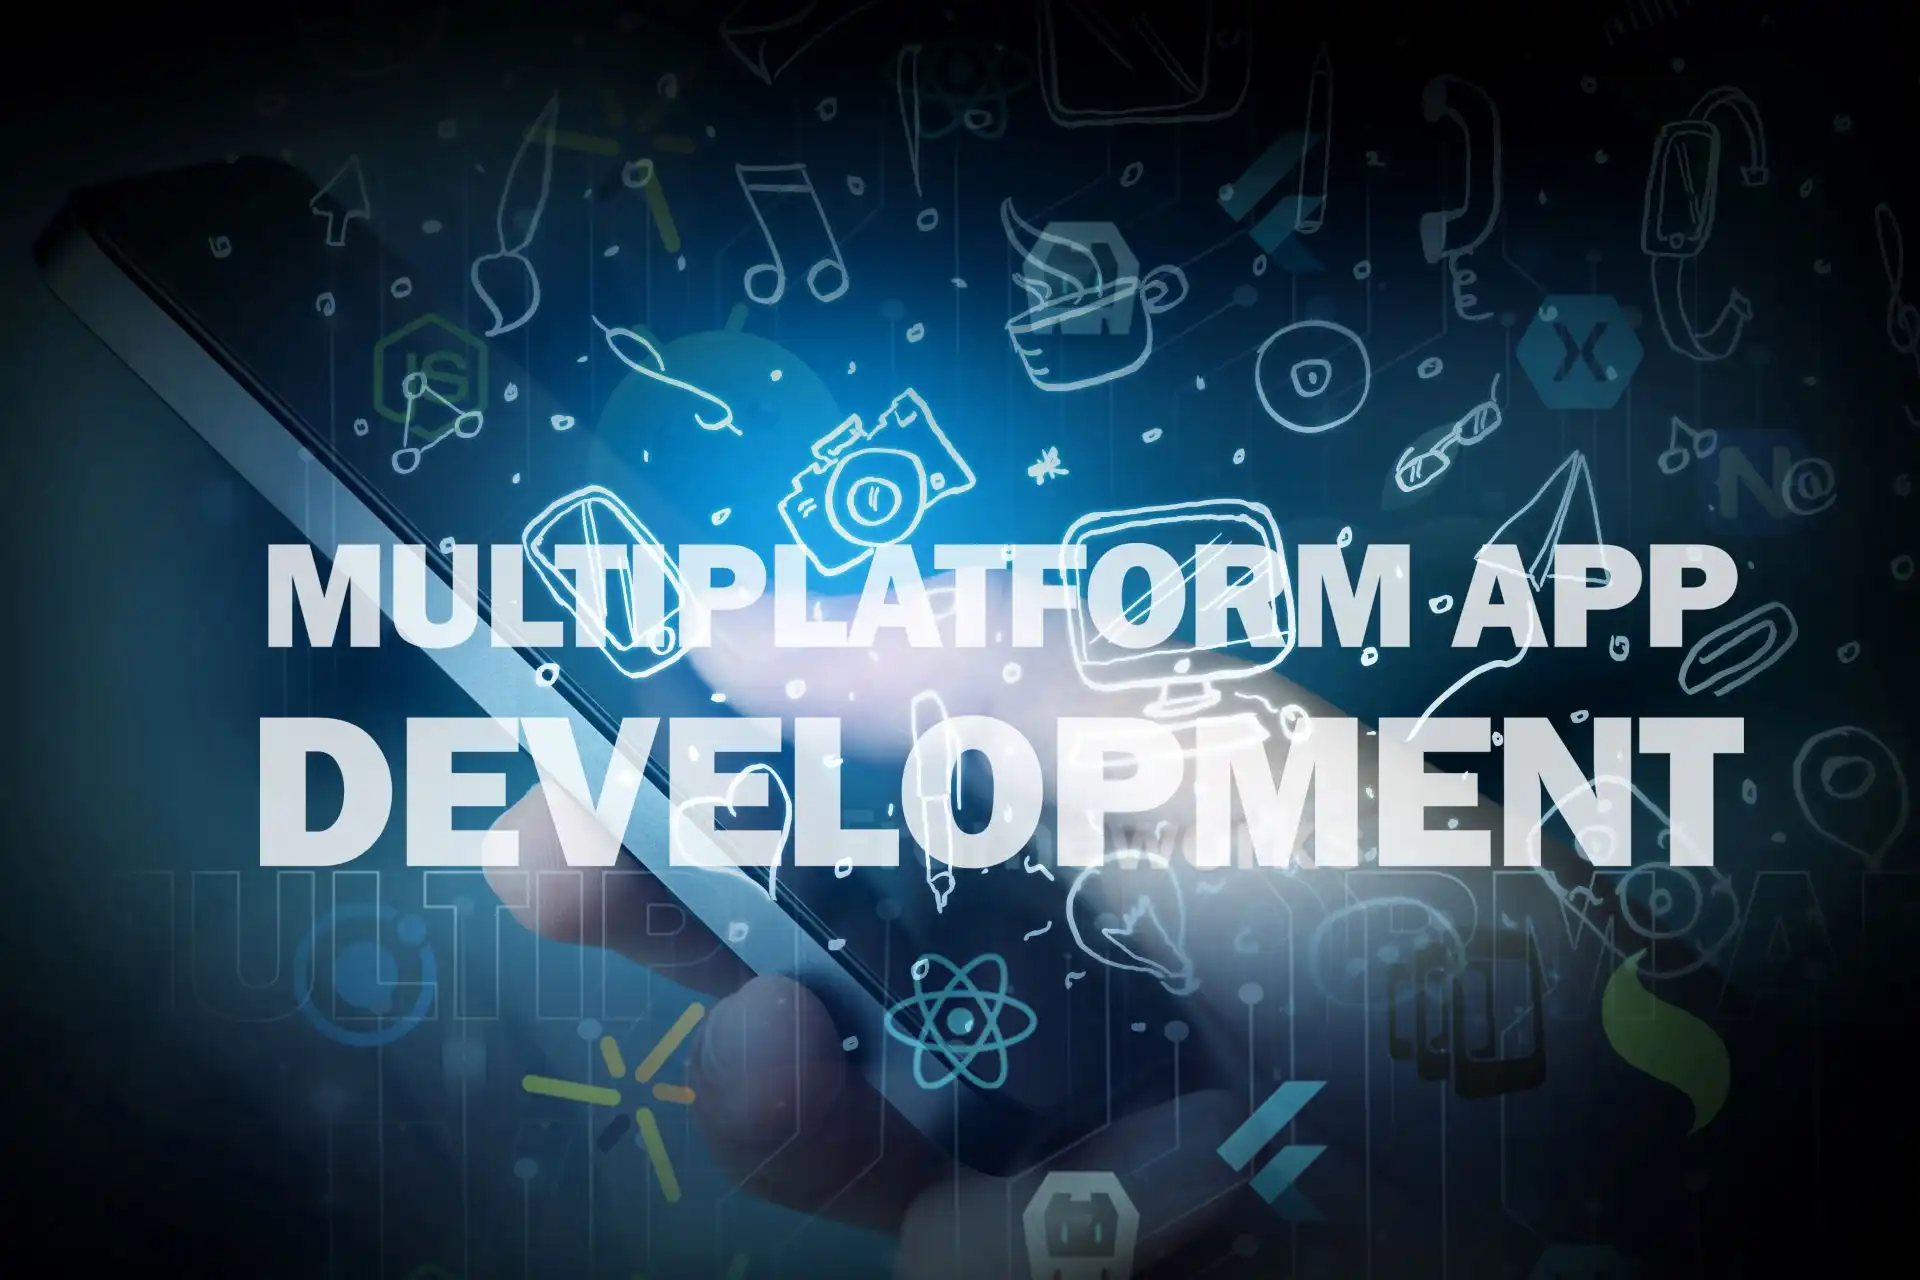 Multiplatform App Development